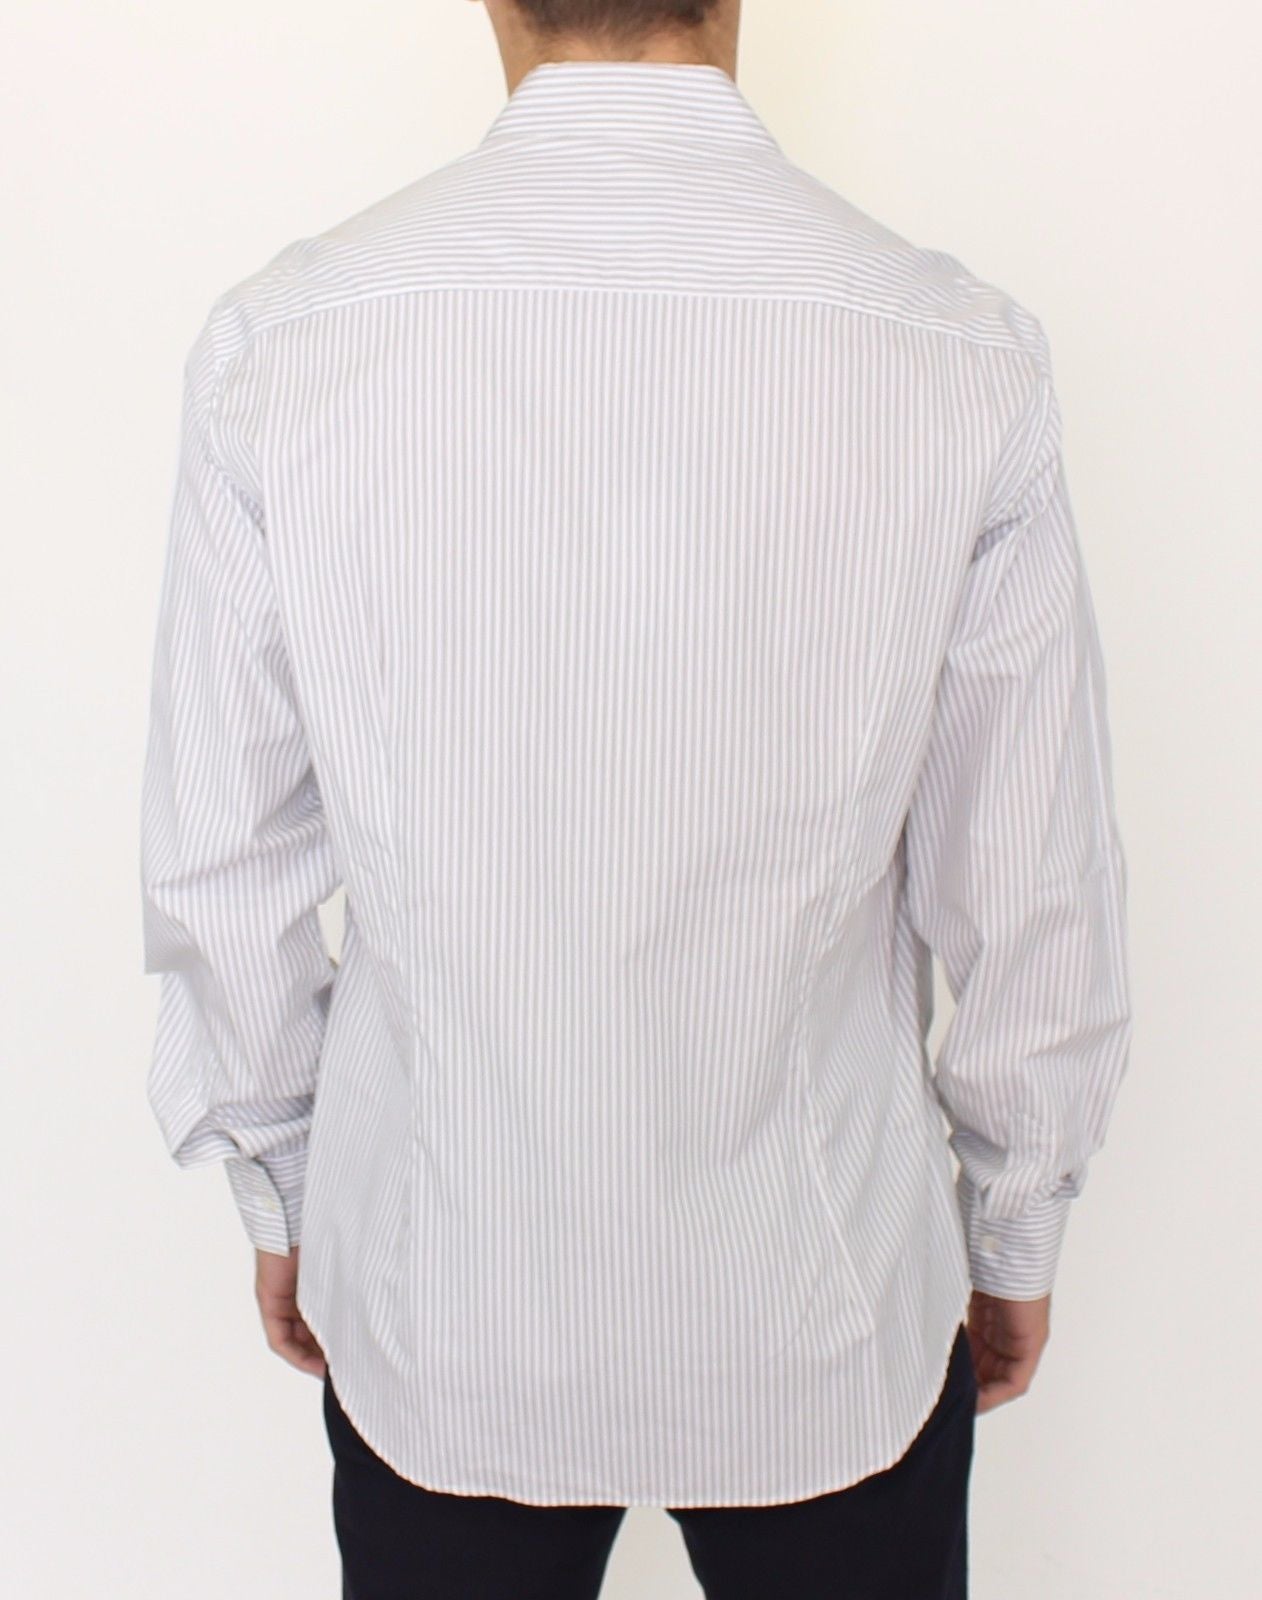 Elegant White and Gray Striped Cotton Shirt